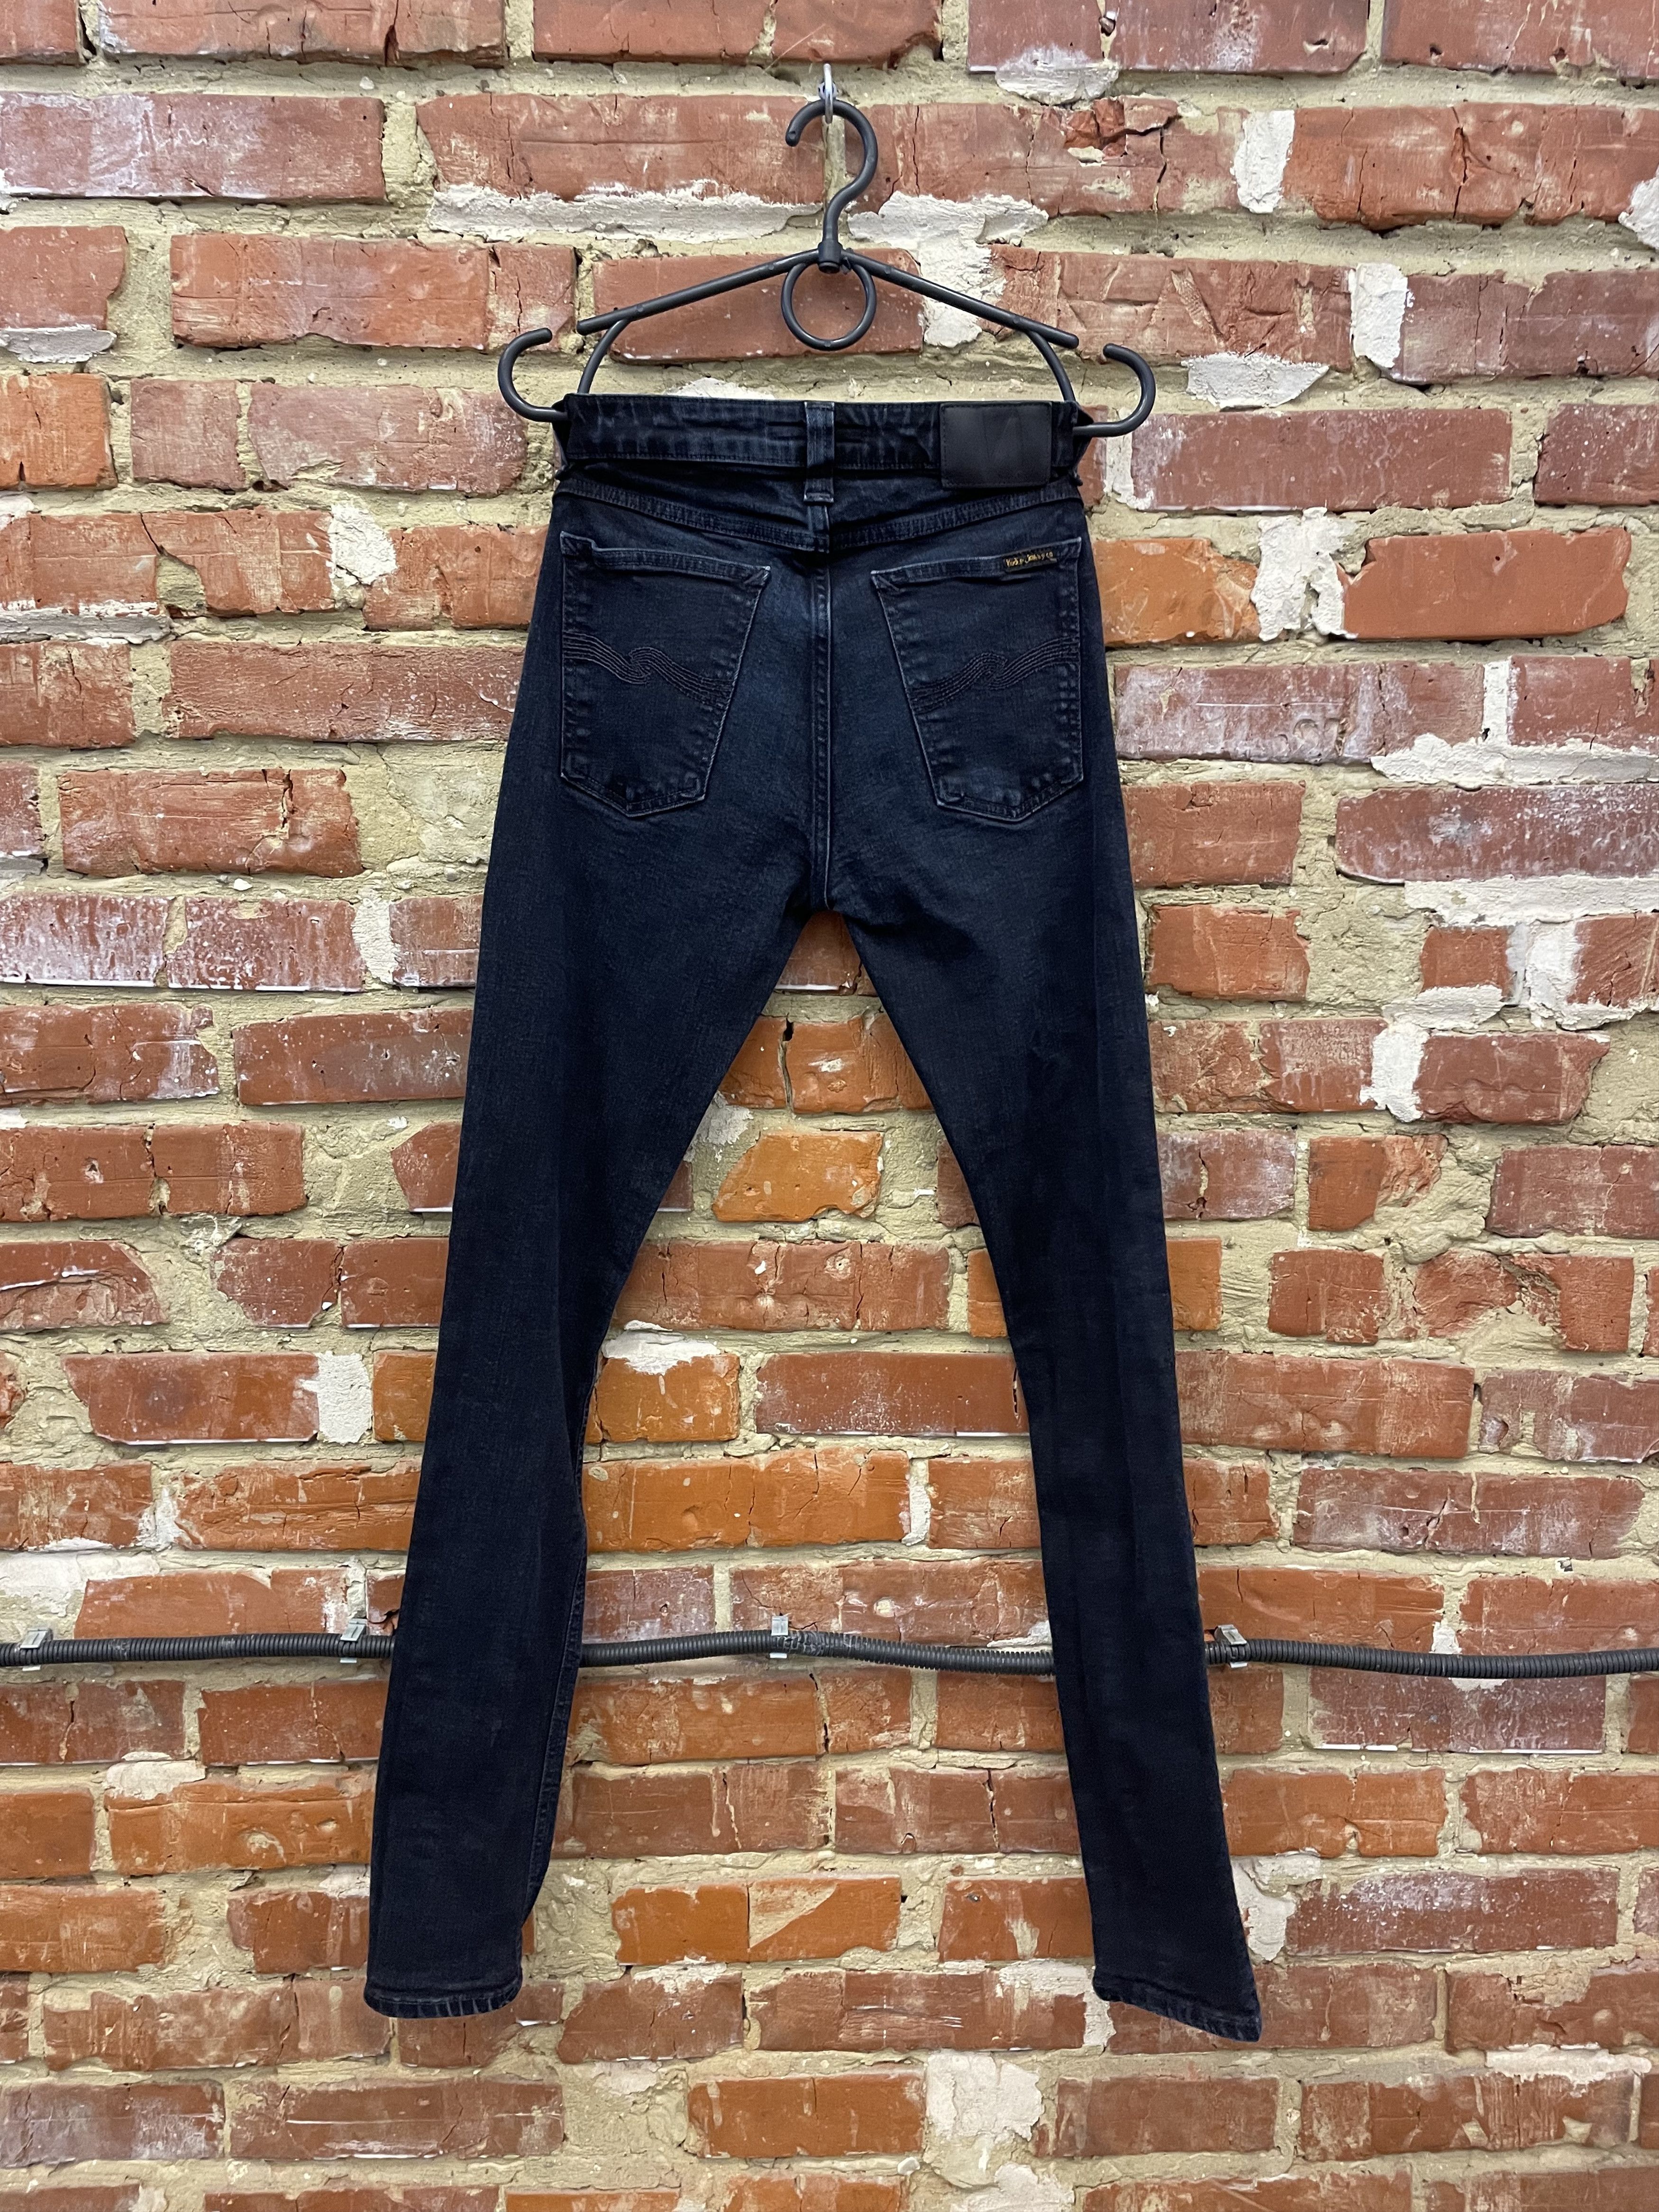 Nudie Jeans Vintage Nudie Jeans Co Jeans Size 30" / US 8 / IT 44 - 5 Preview